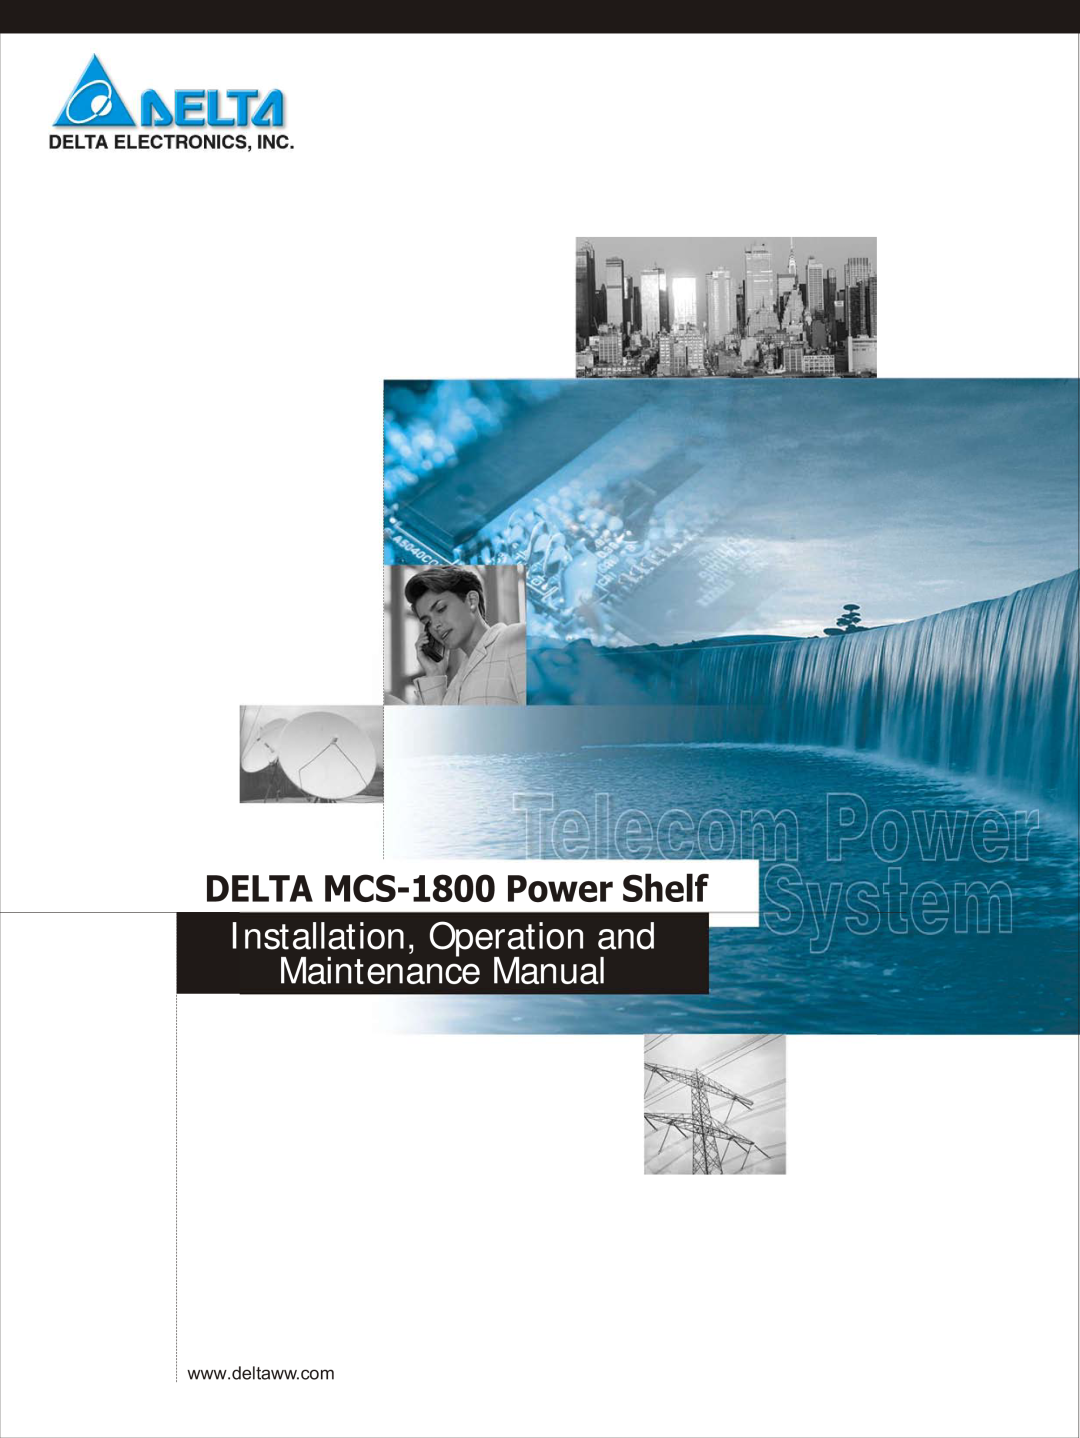 Delta manual DELTA MCS-1800 Power Shelf, Installation, Operation and Maintenance Manual 